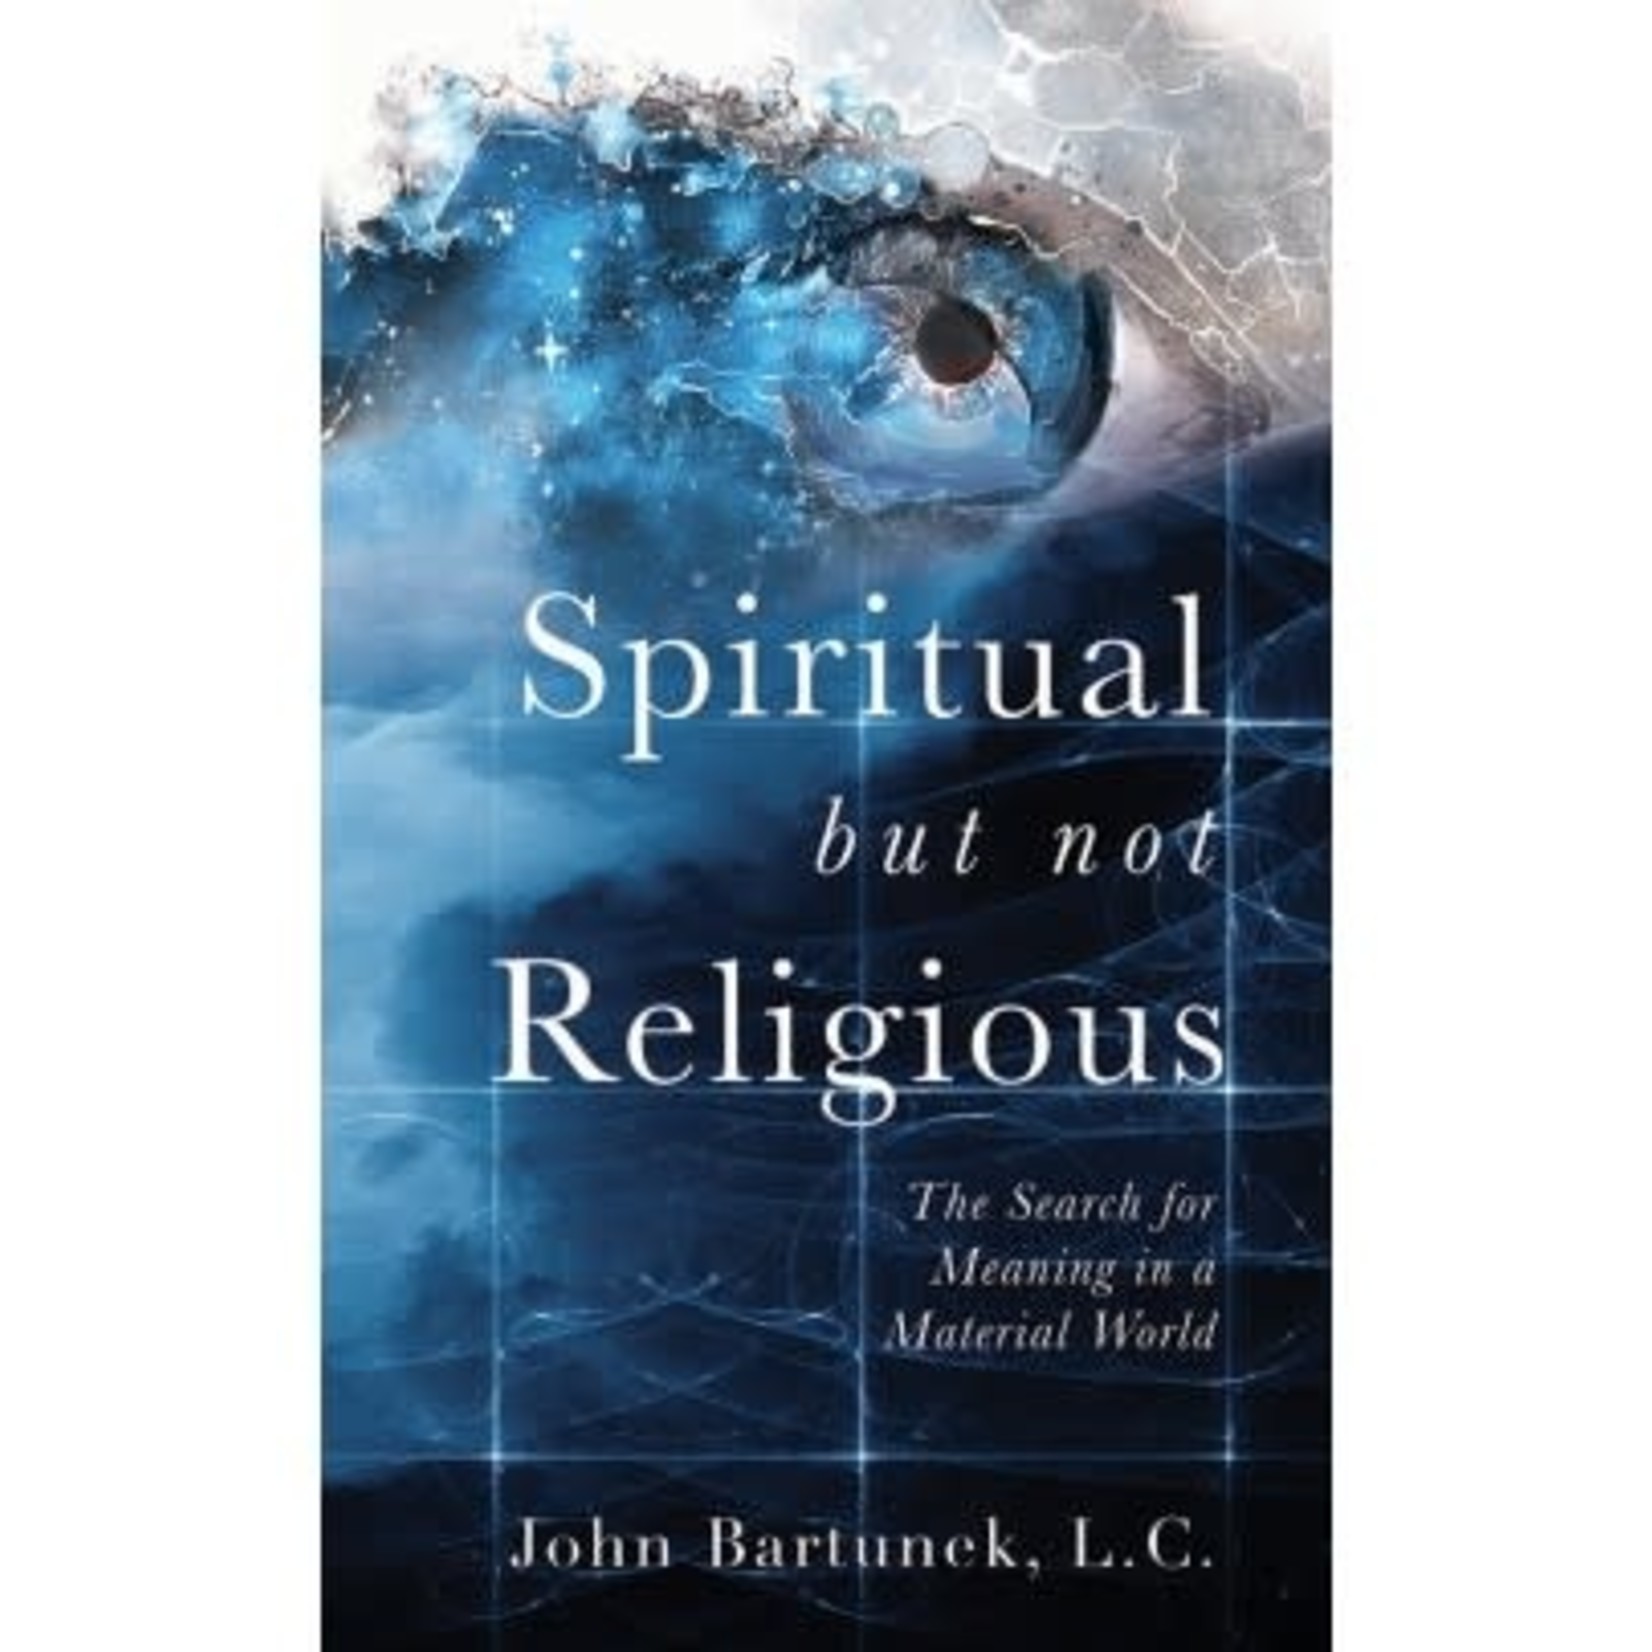 Spiritual but not Religious